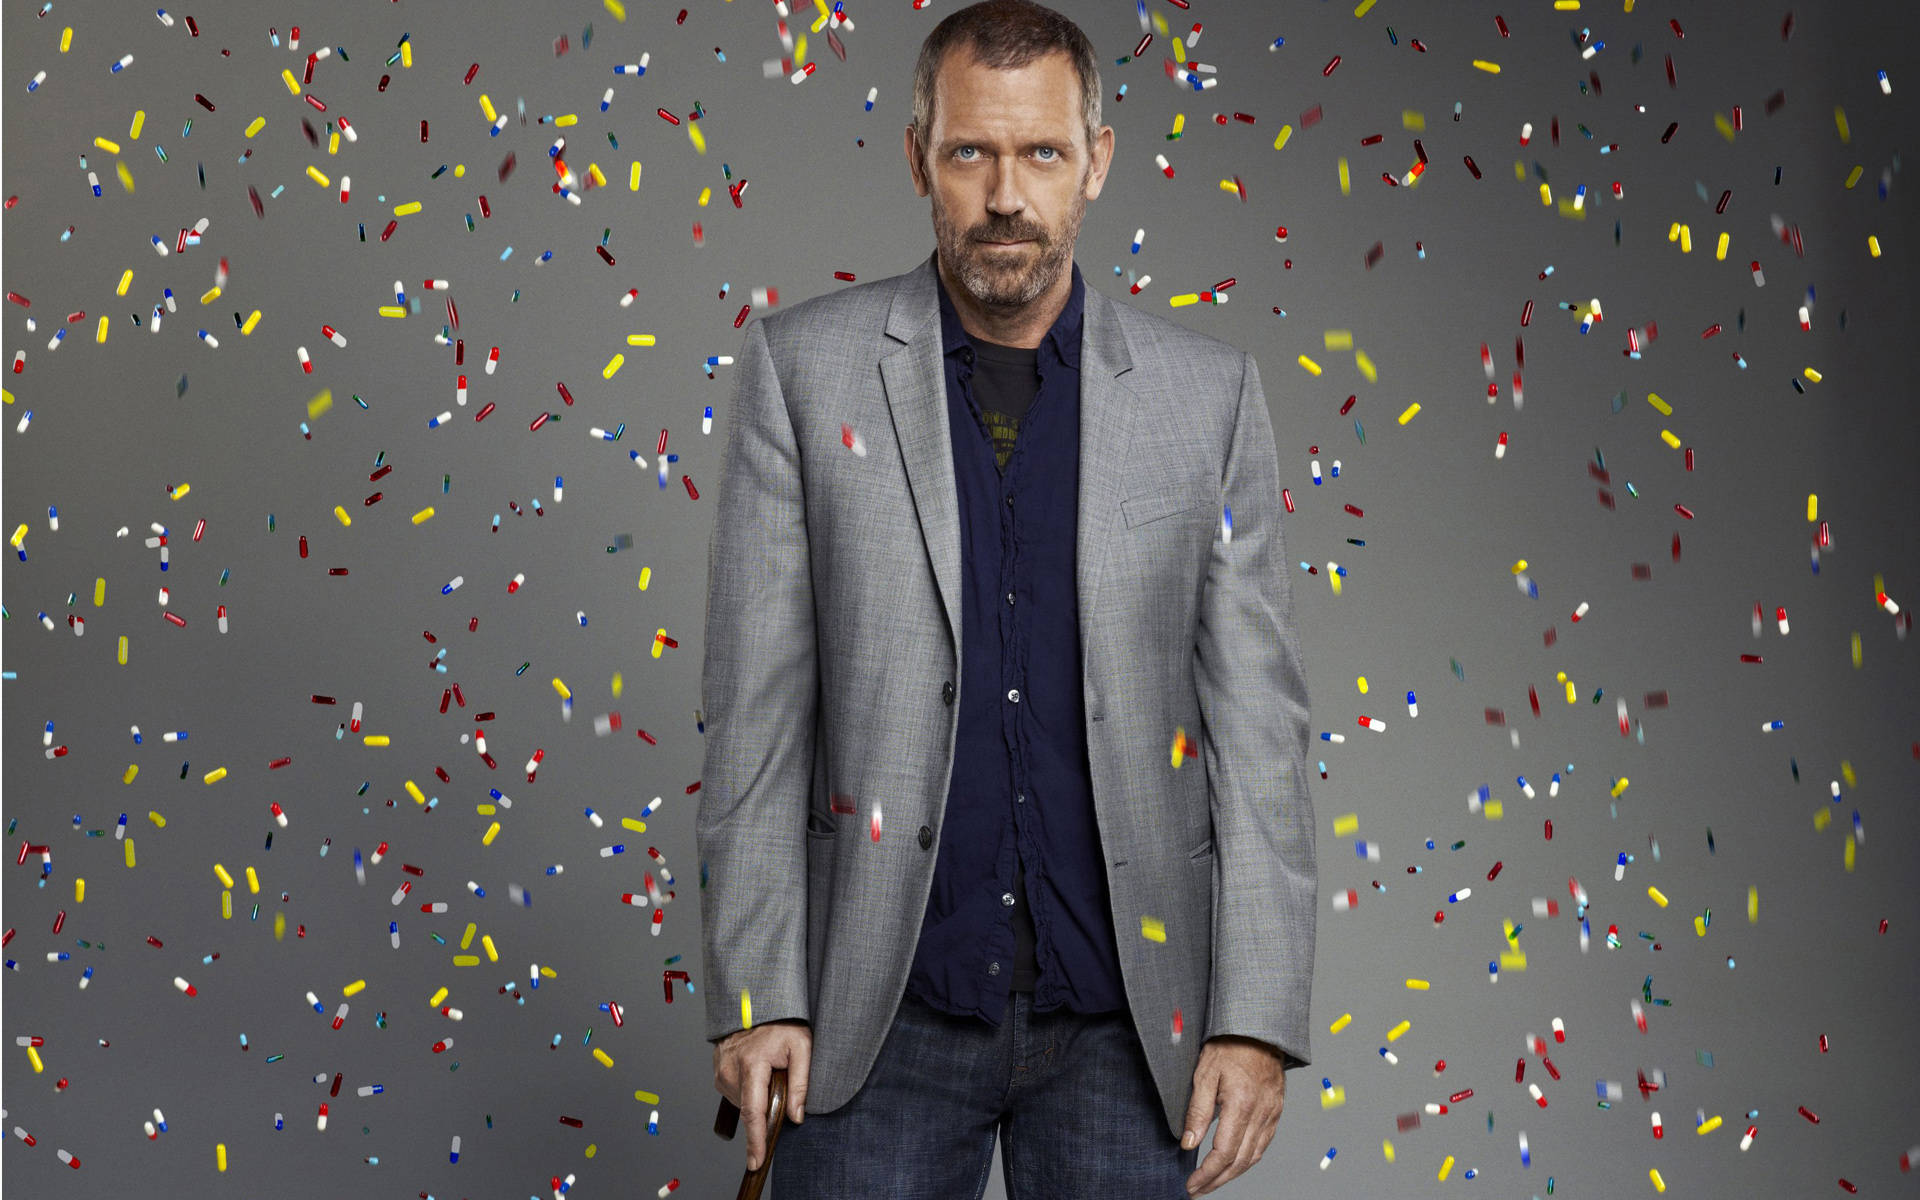 Hugh Laurie Portrait With Confetti Wallpaper